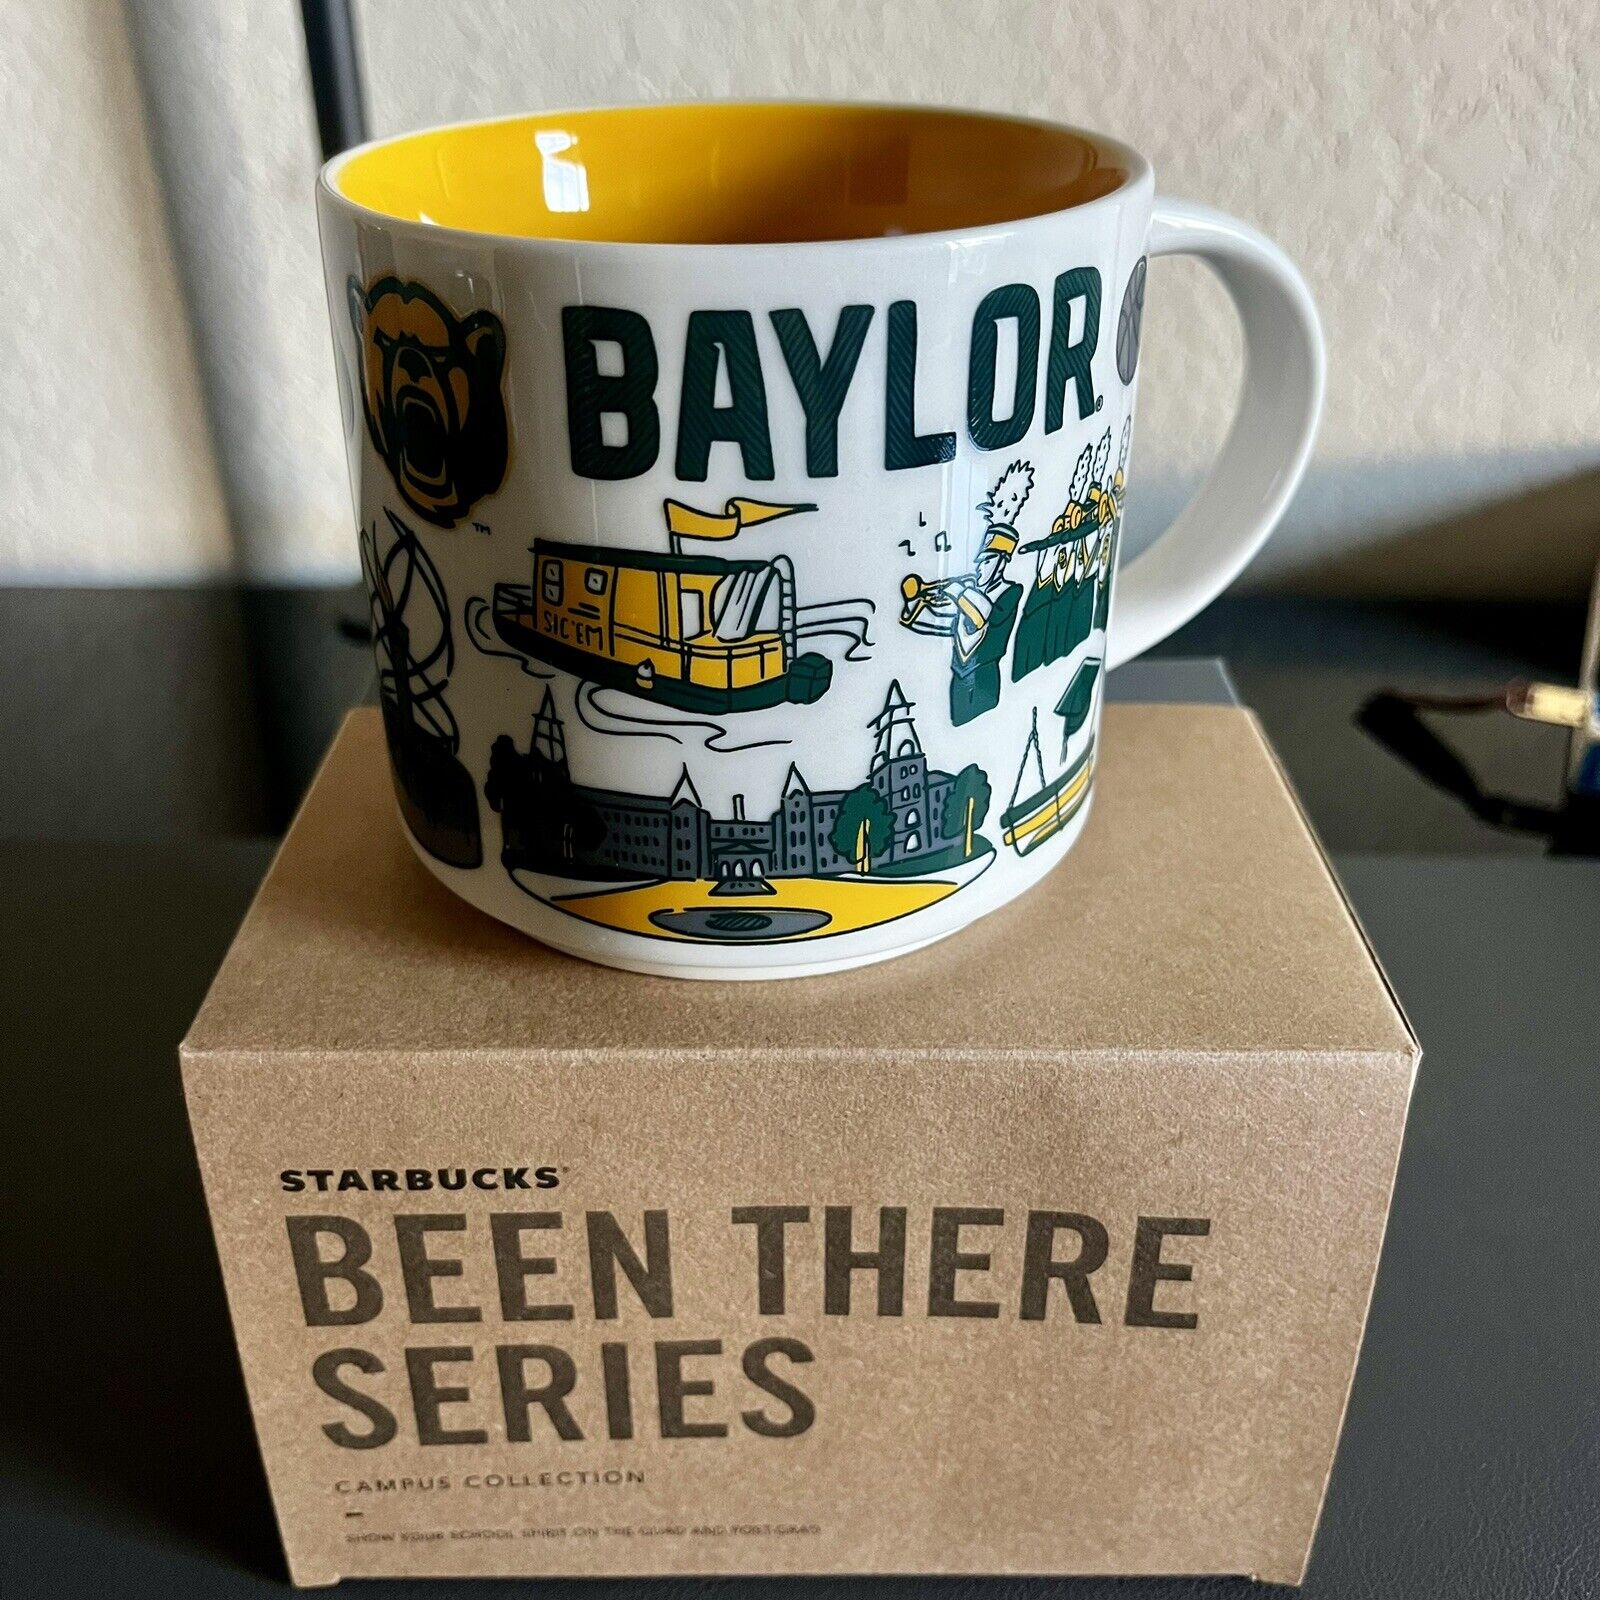 Starbucks BAYLOR University Been There Series Campus Collection 14 oz mug - BNIB